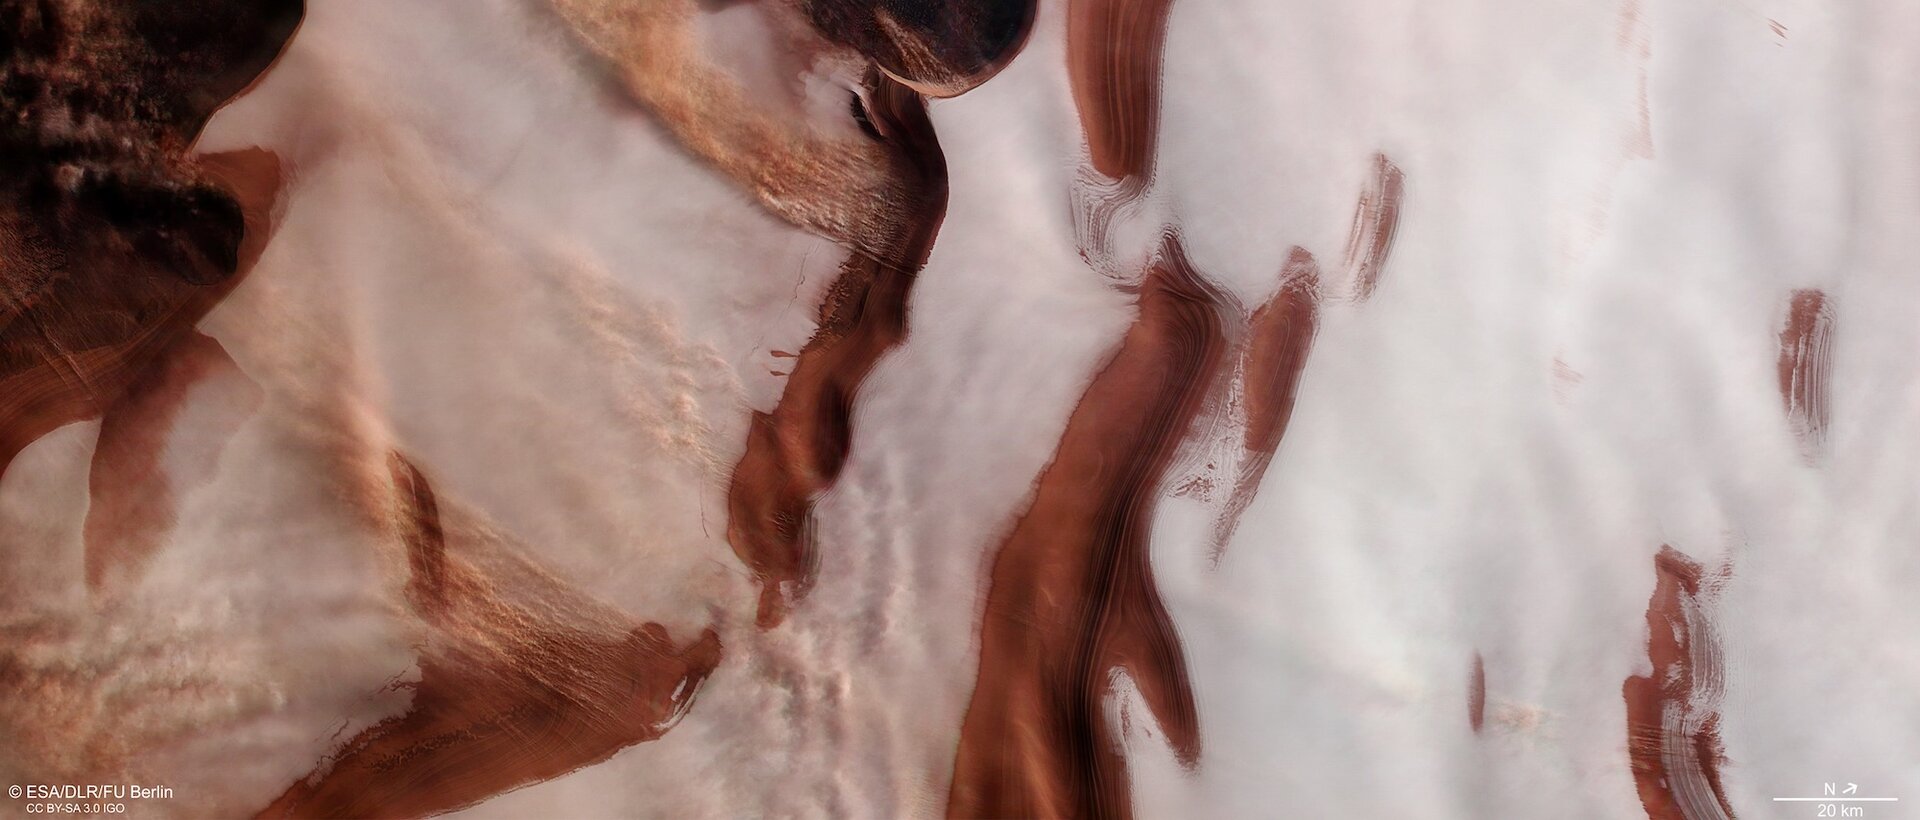 Stormy activity at Mars icy north pole pillars